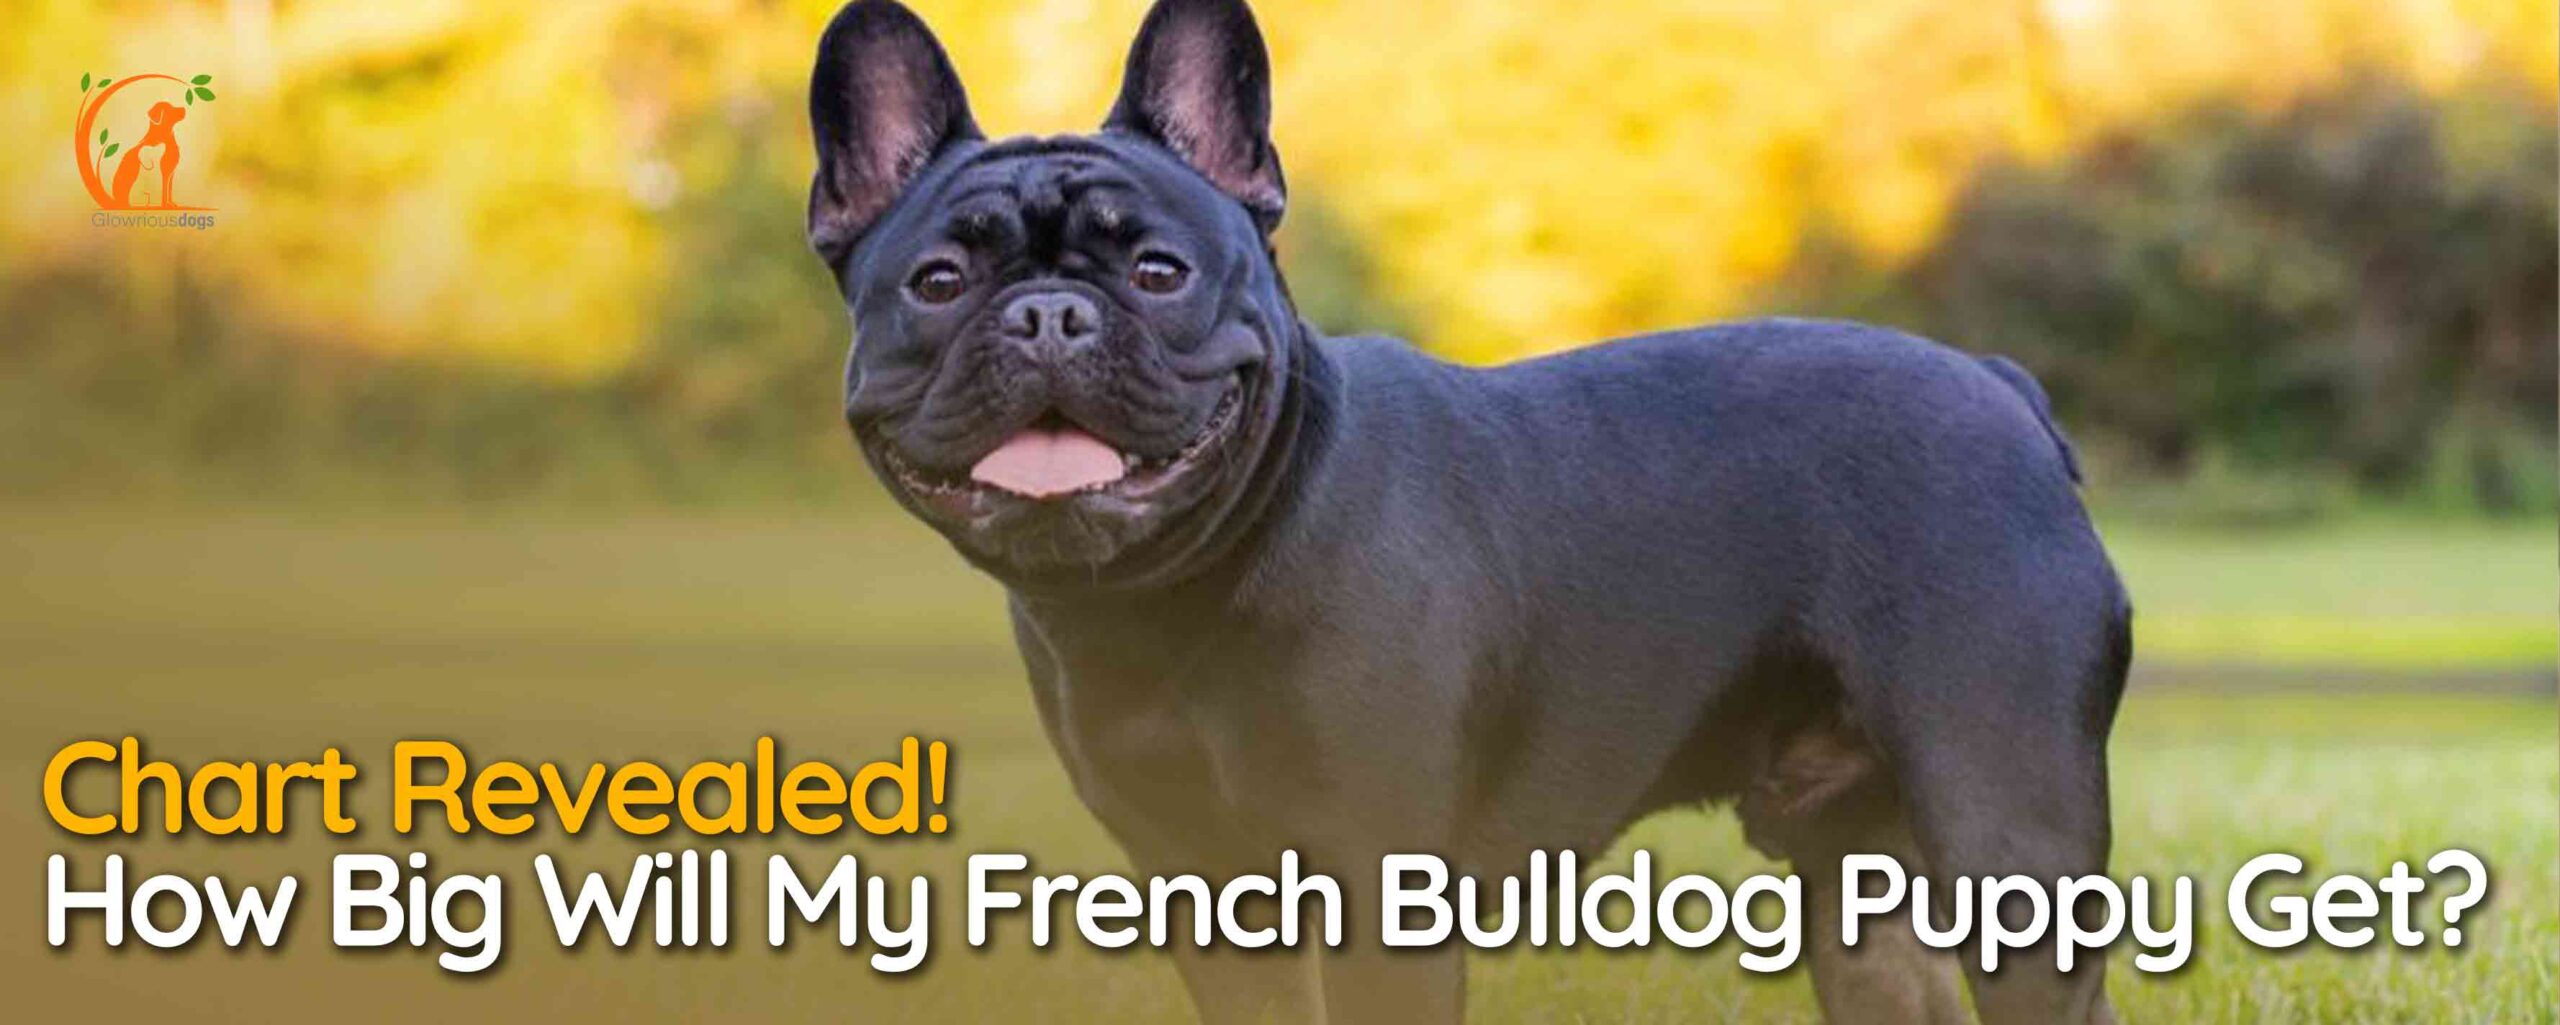 How Big Will My French Bulldog Puppy Get